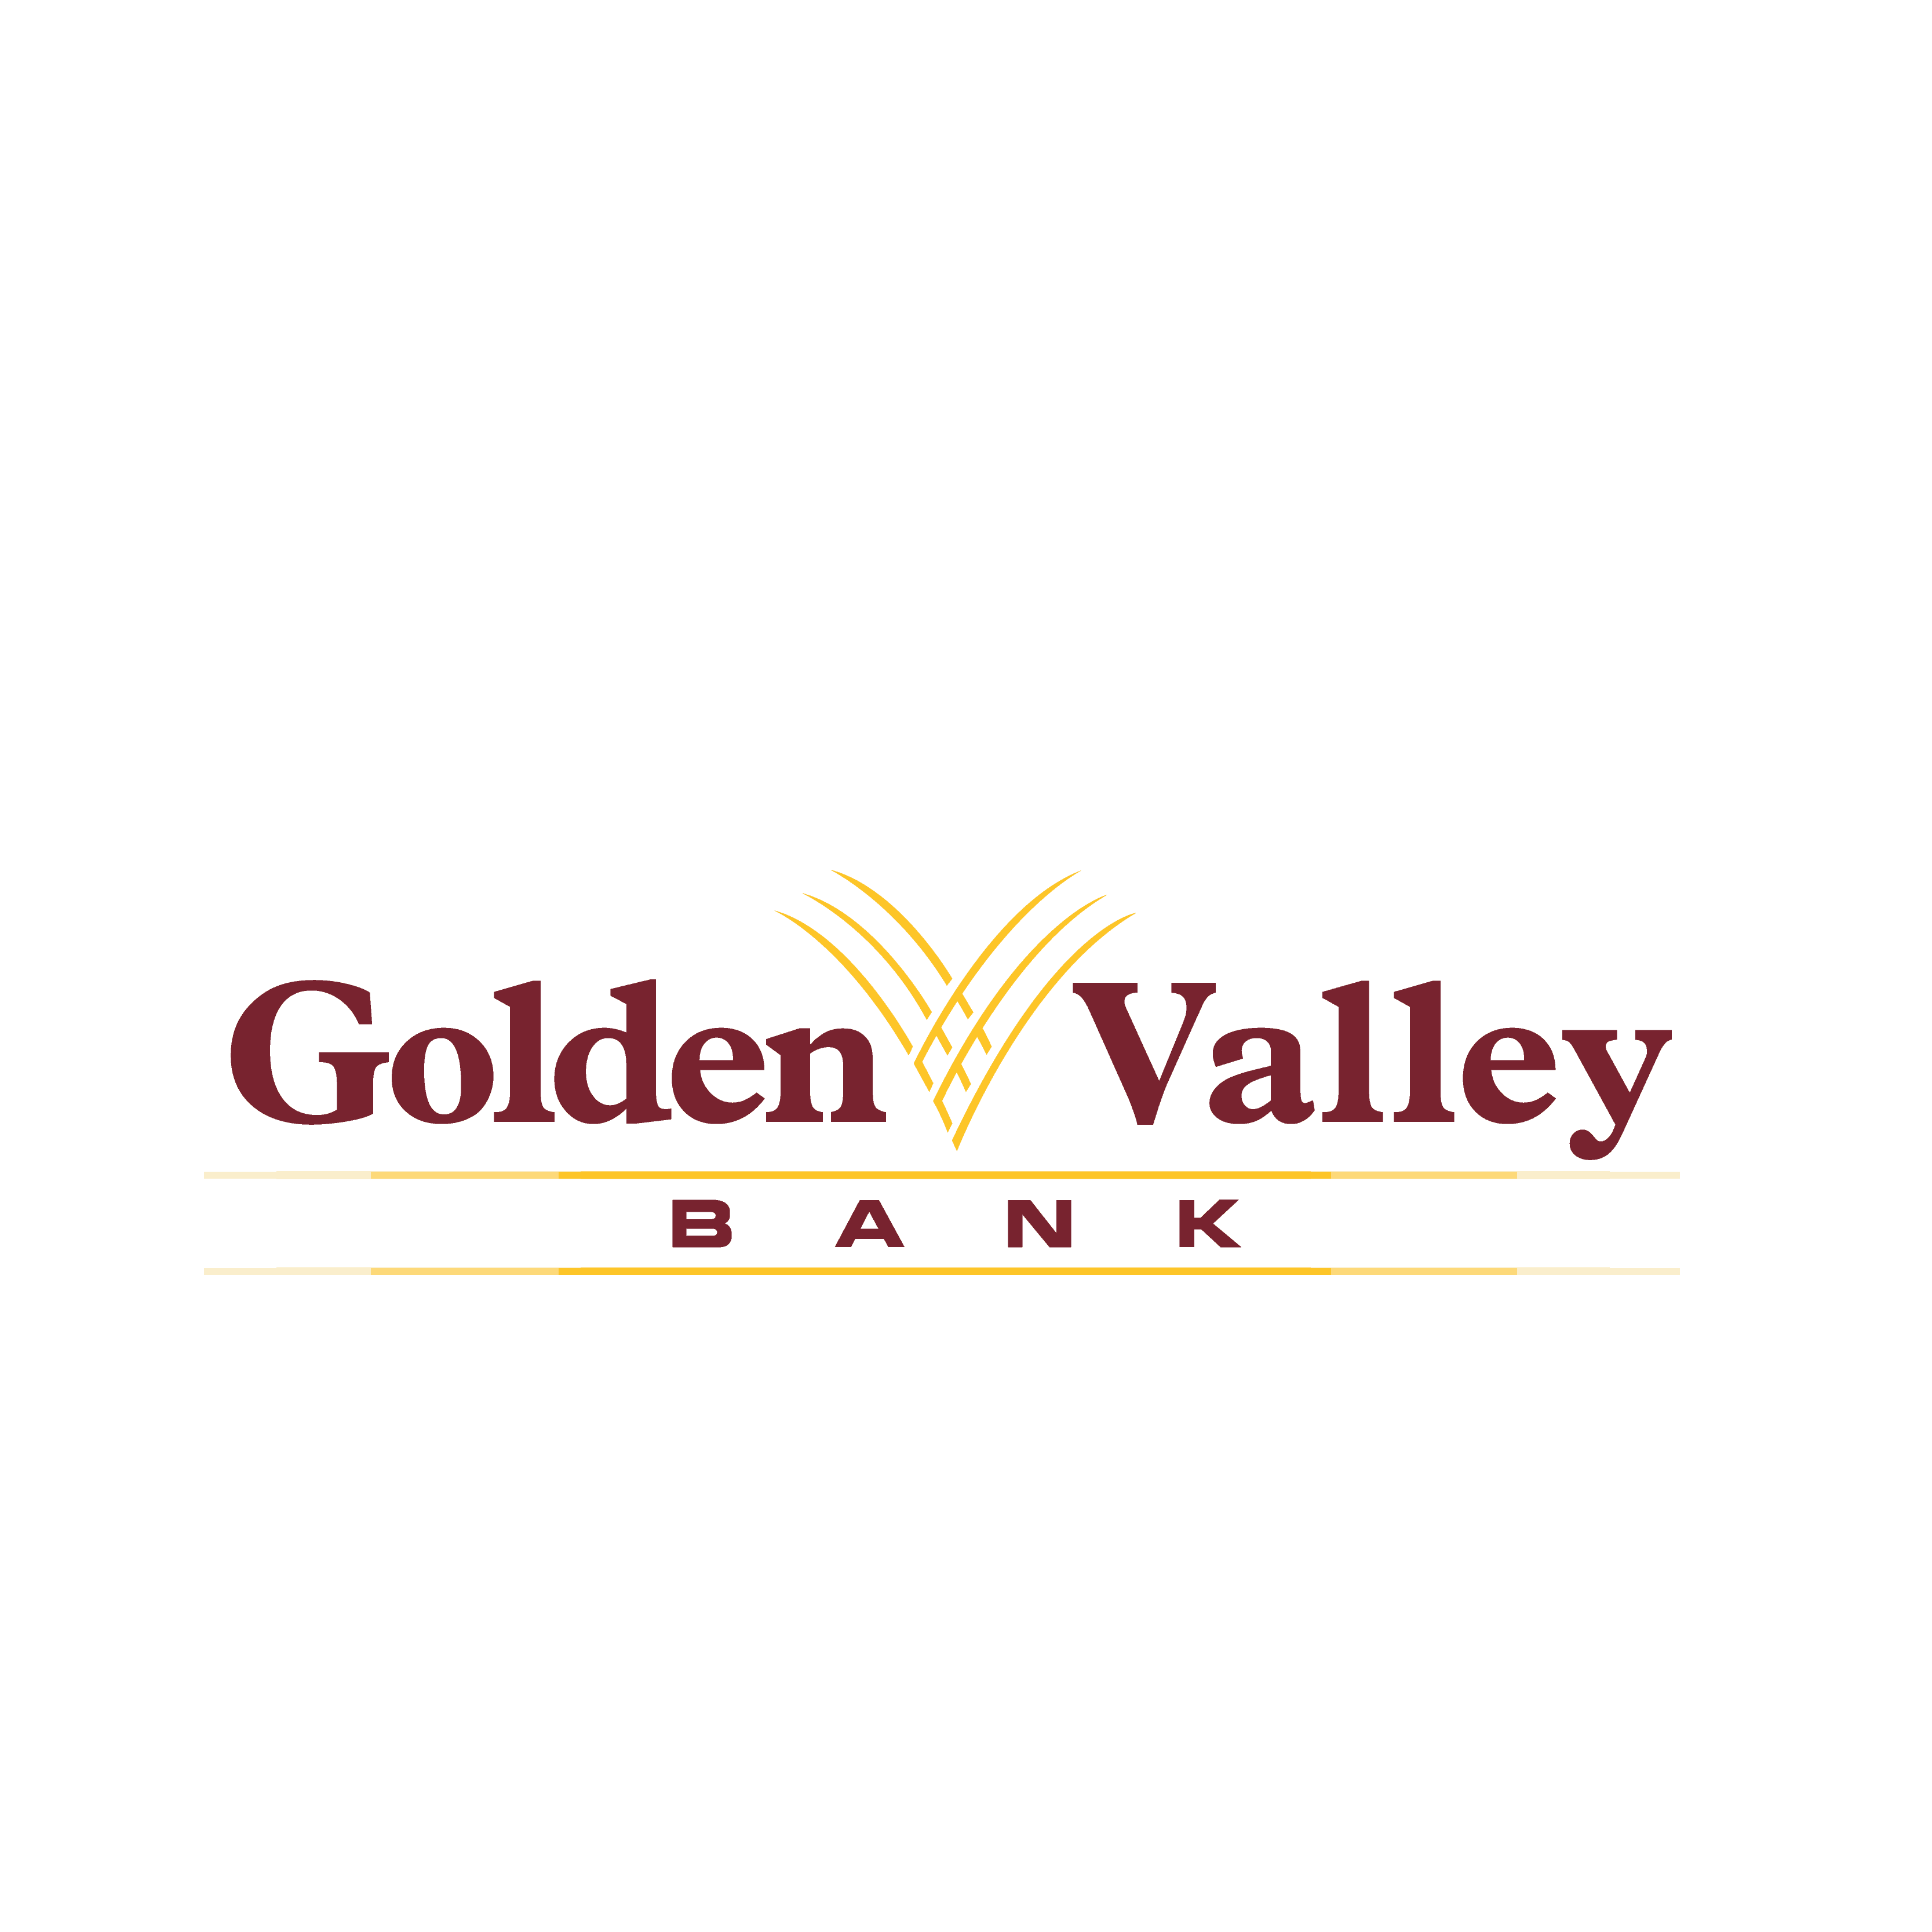 Golden Valley Bank